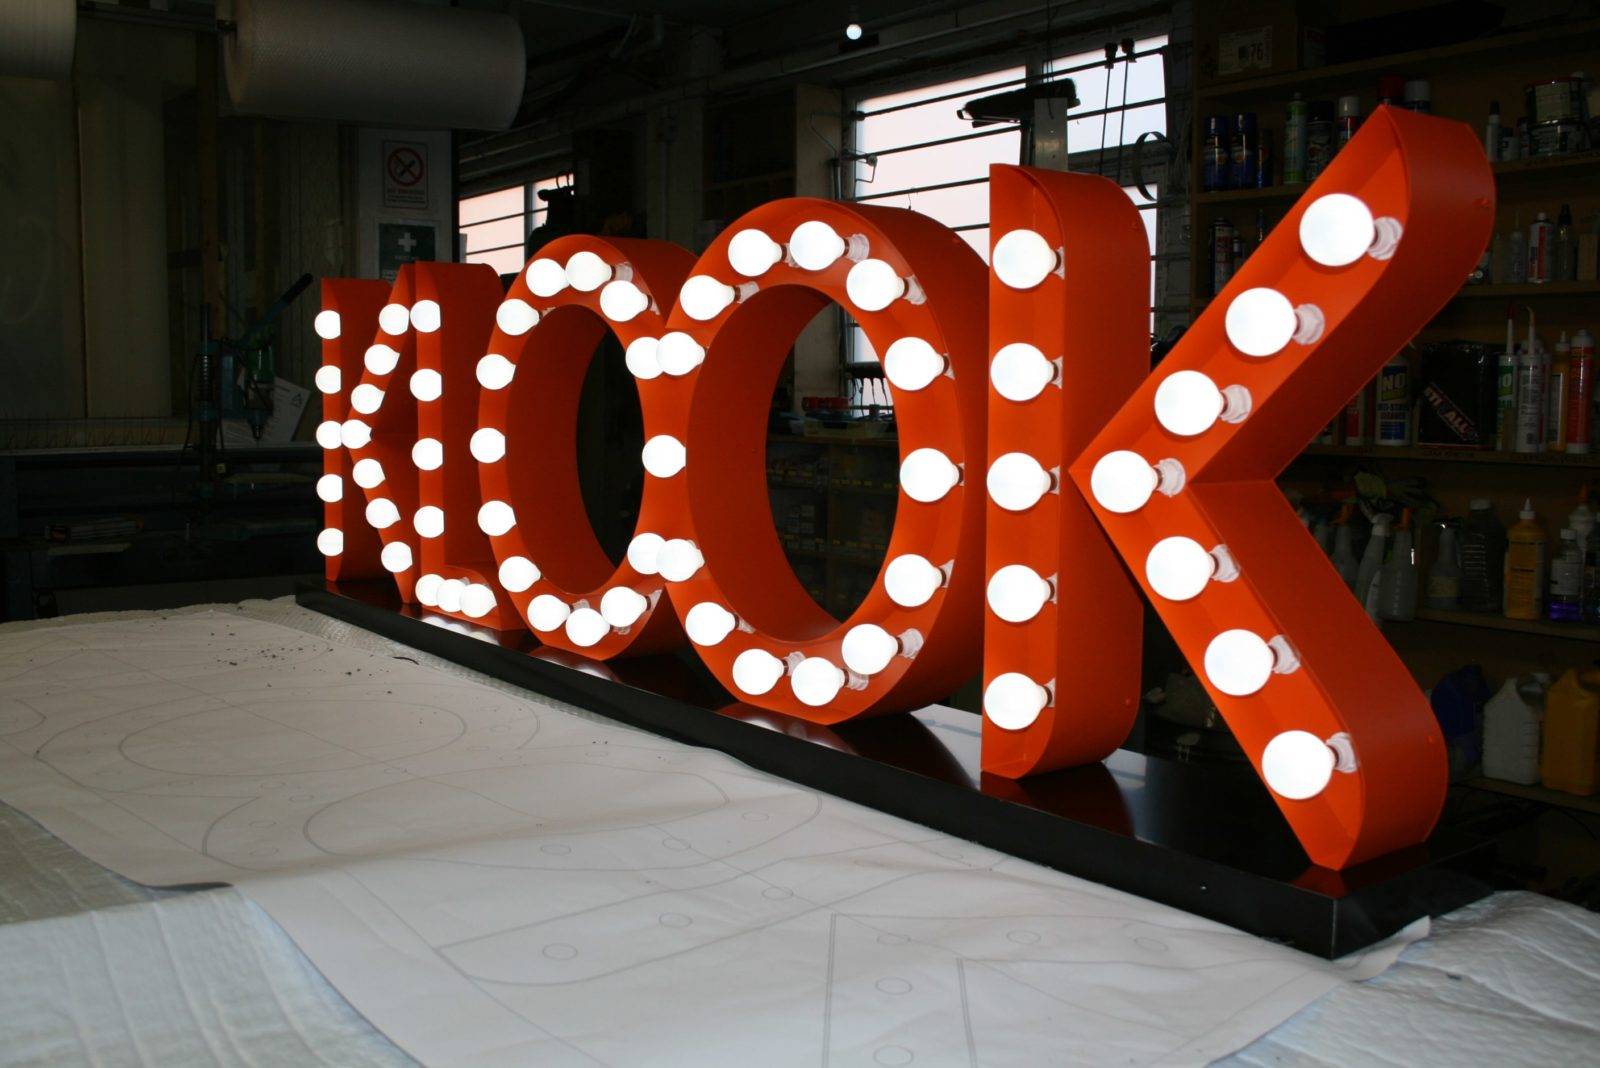 klook - Light bulb signs